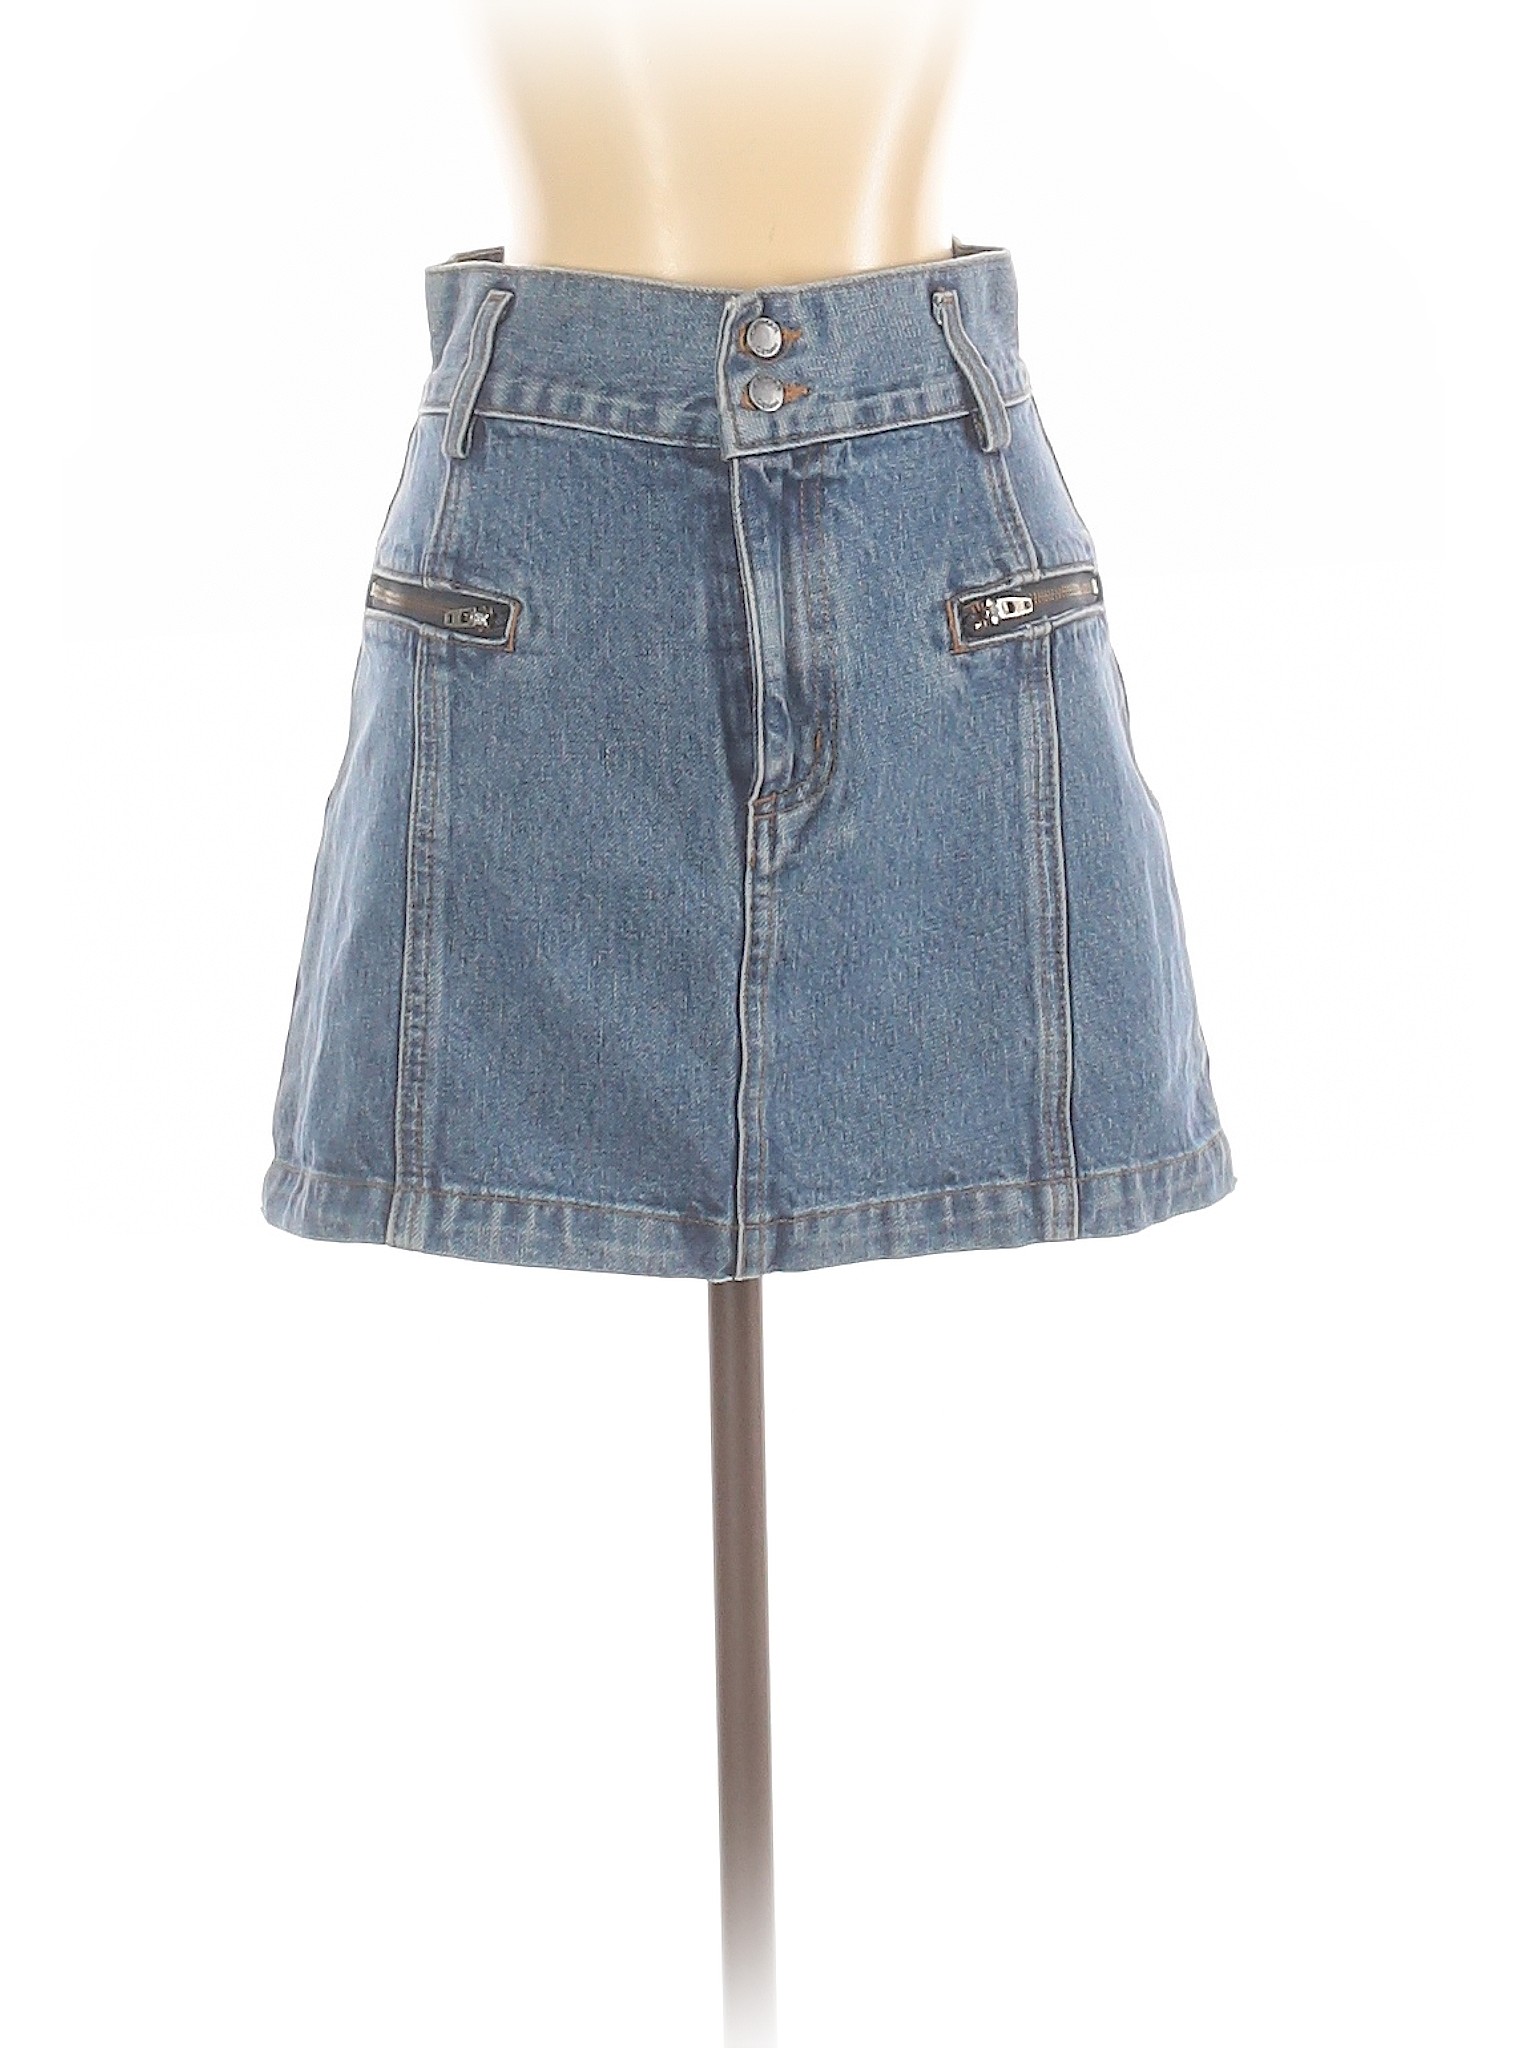 Carmar Women Blue Denim Skirt 26W | eBay